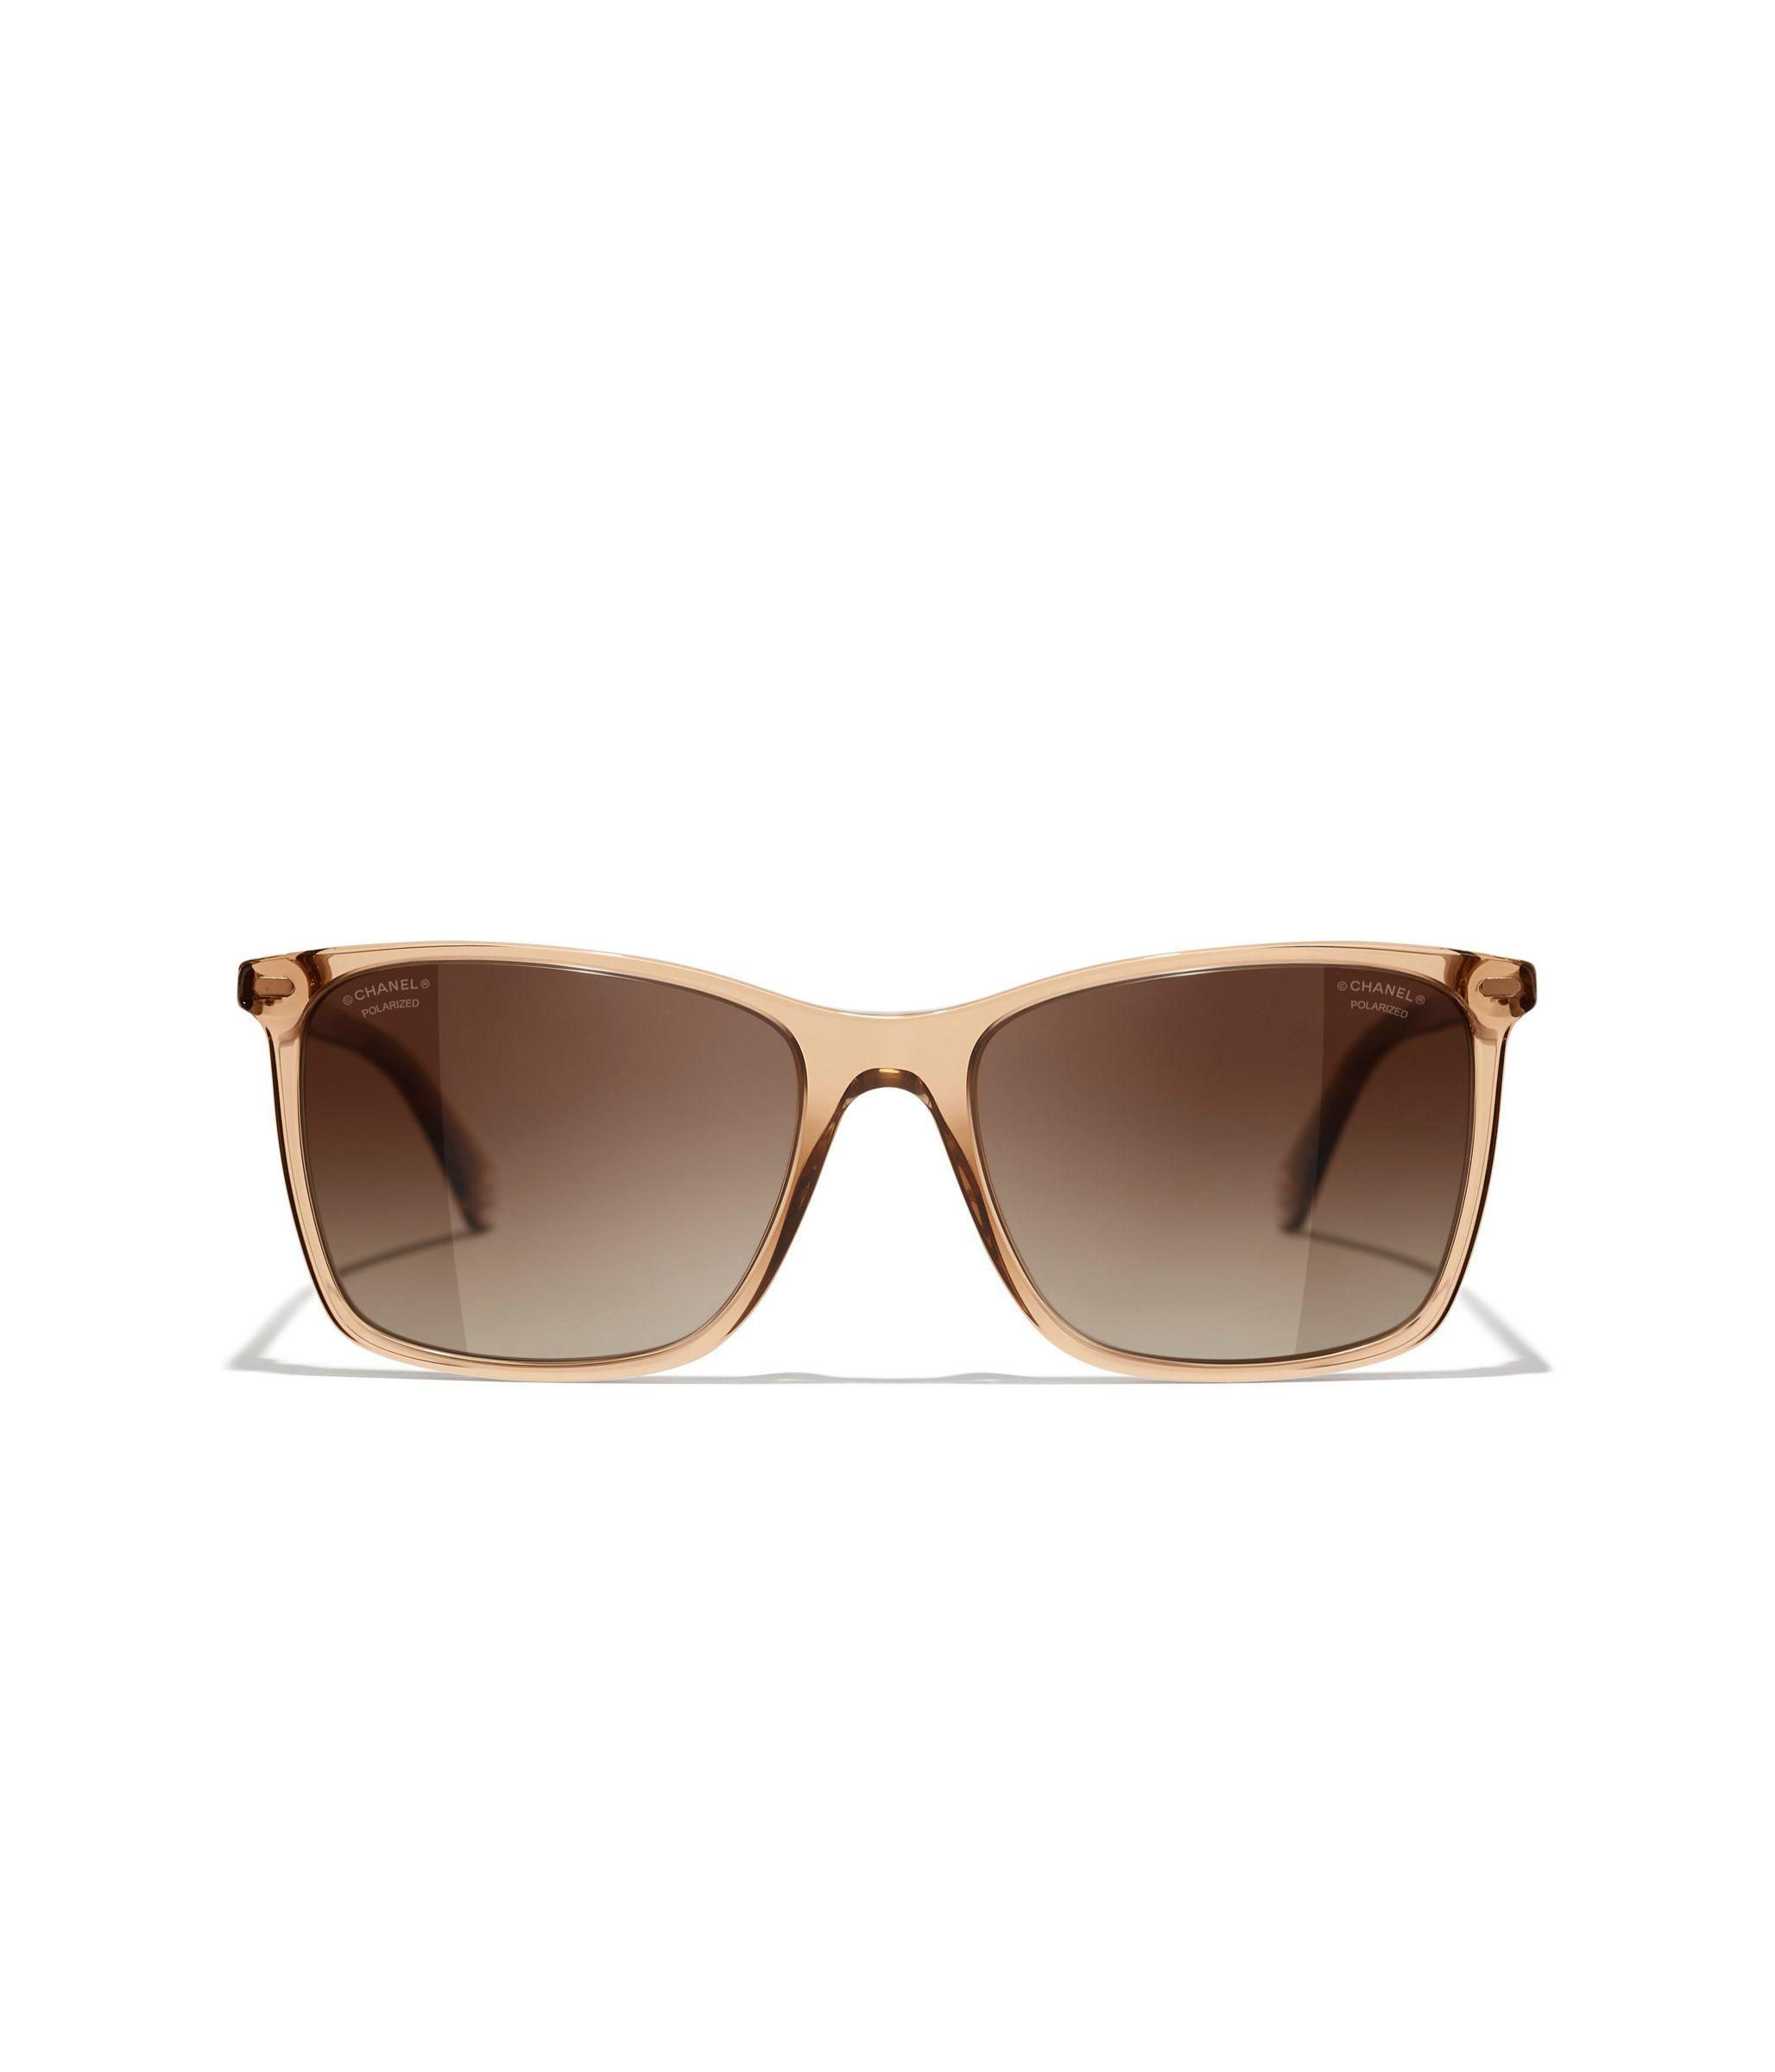 Chanel Rectangular Sunglasses Ch5447 Light Brown/brown Gradient